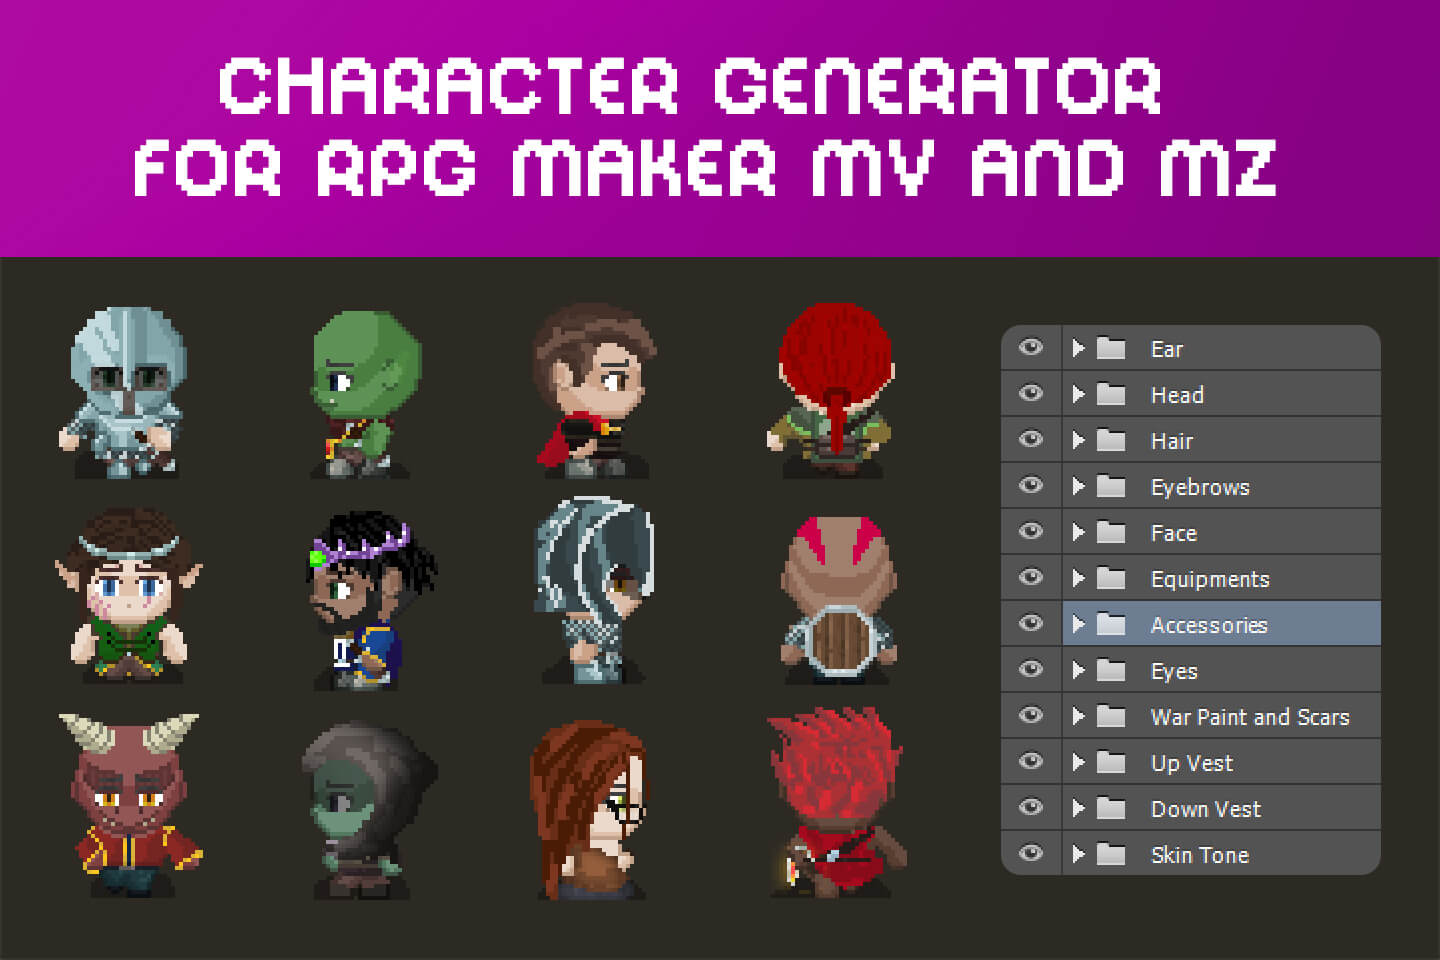 rpg character sprite creator free